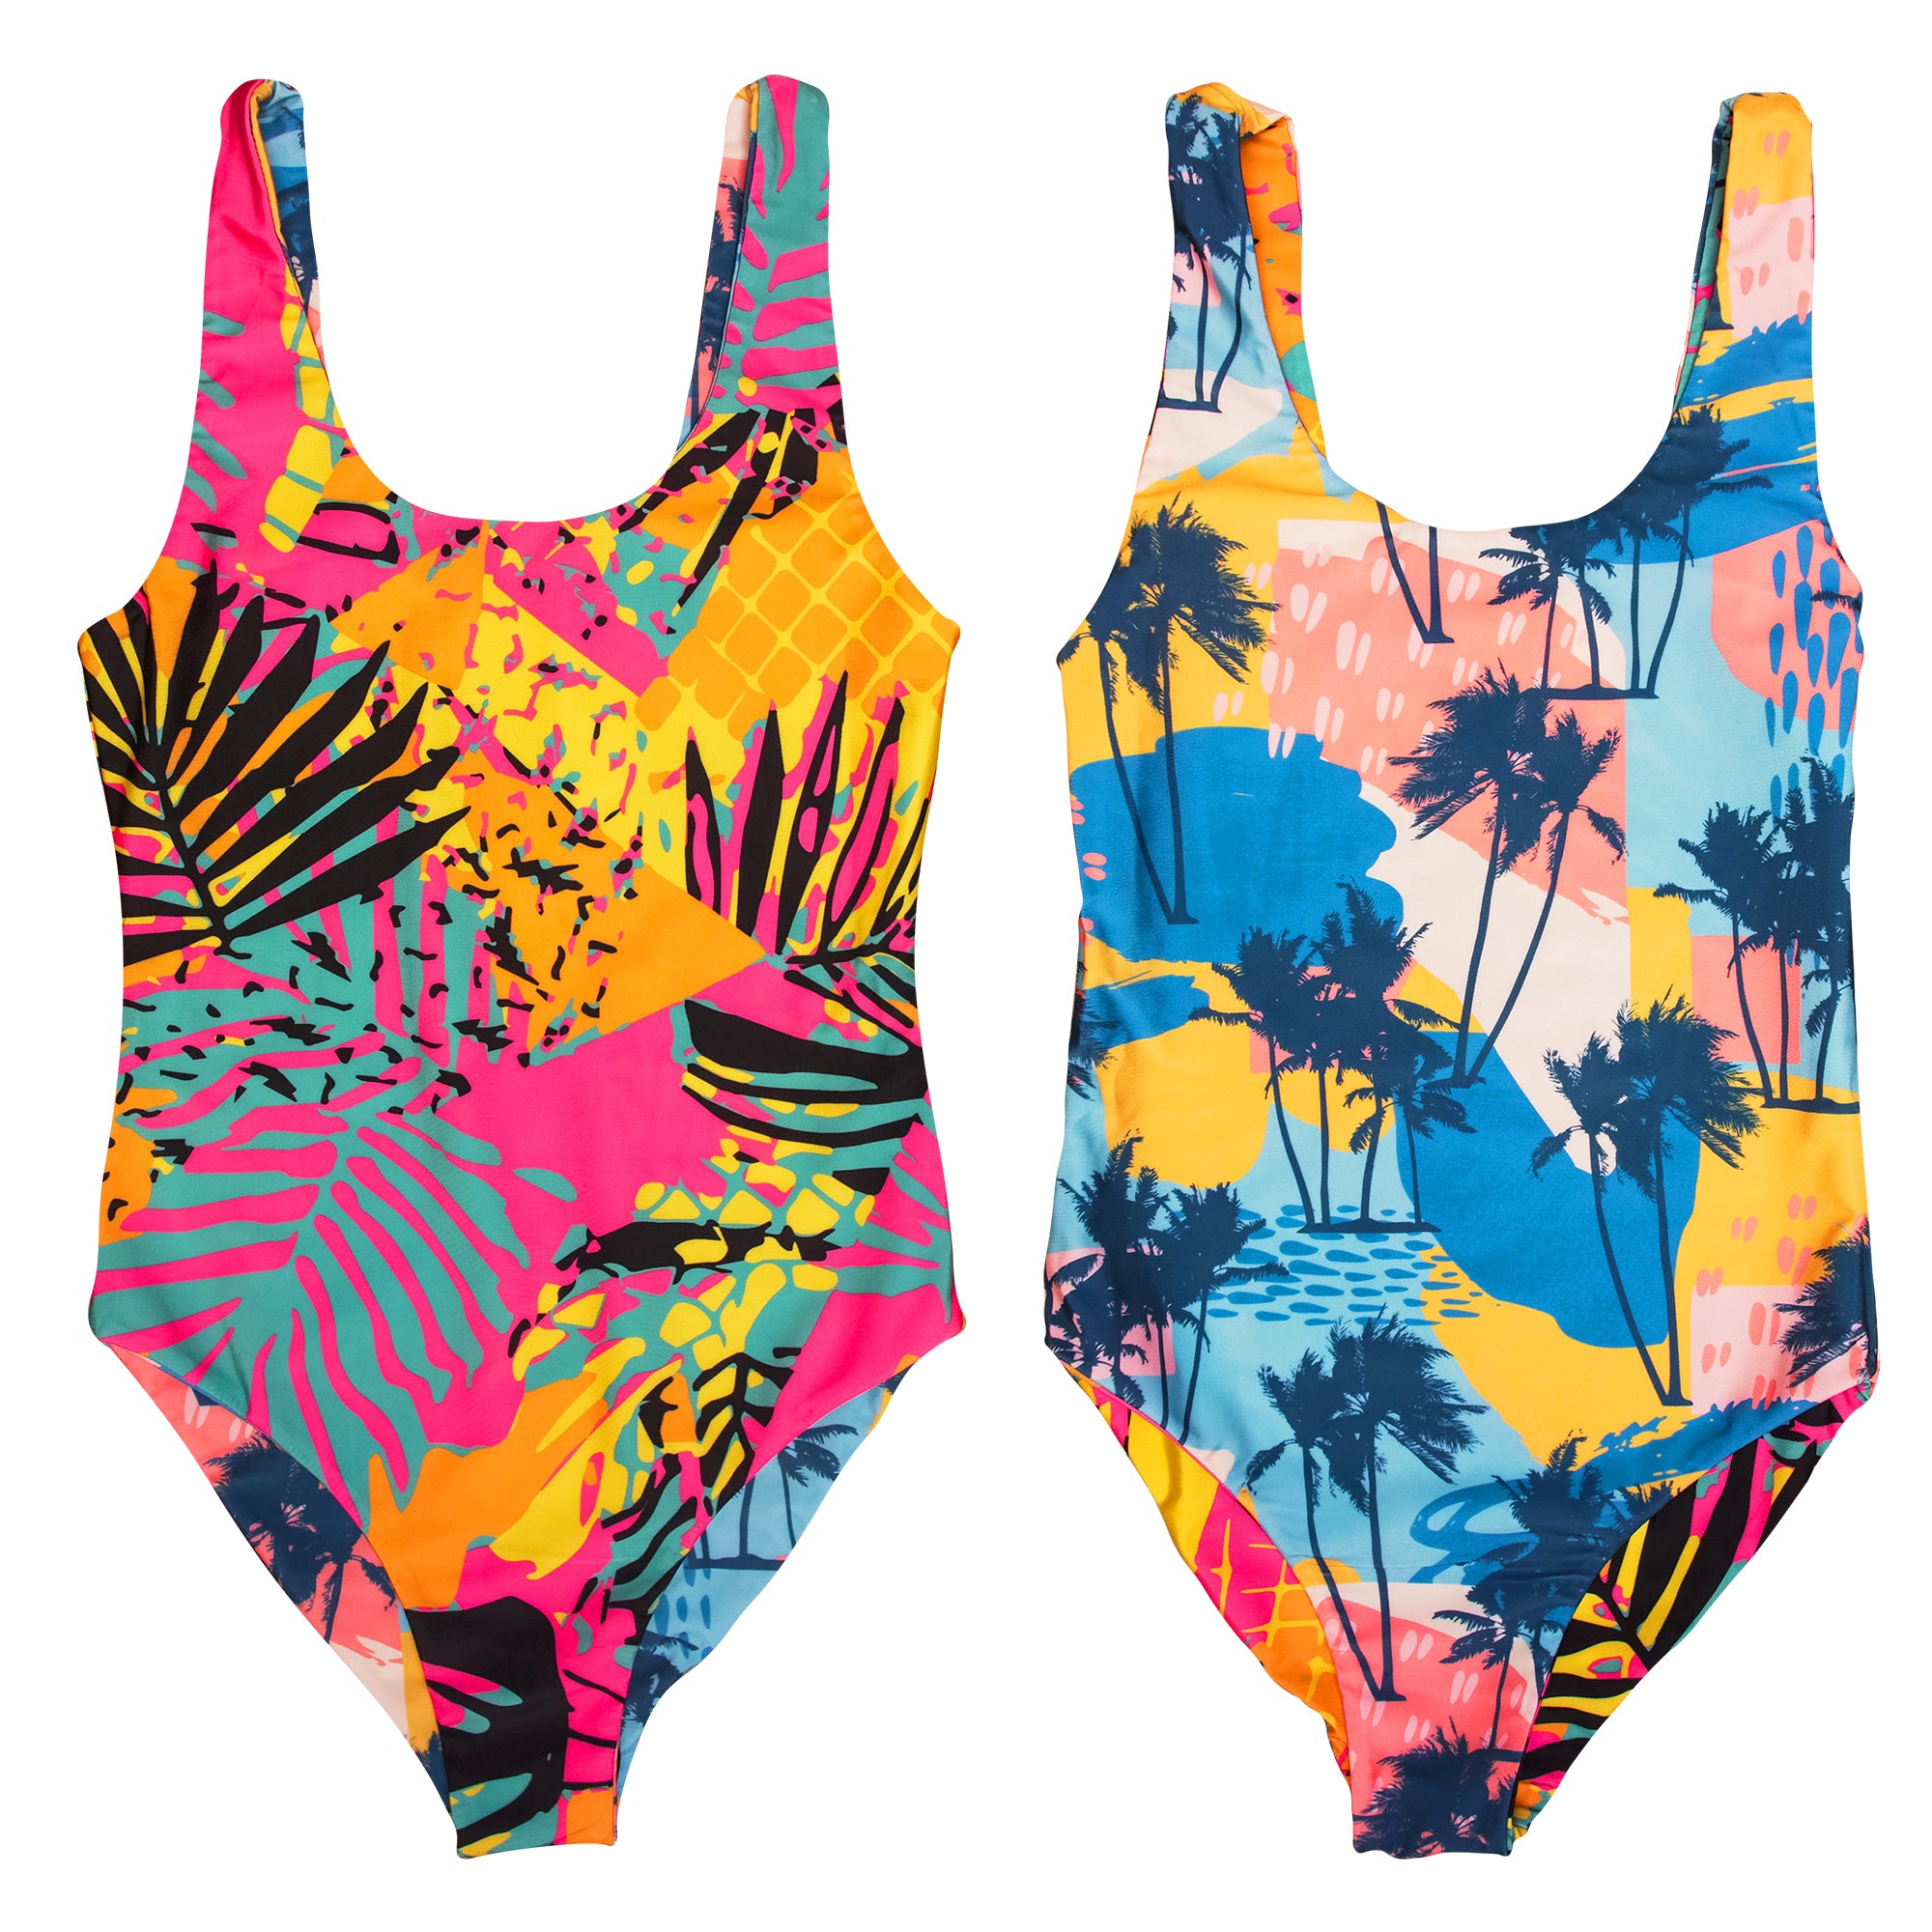 Summer Jam Beach Bum 80s retro Reversible Swimwear. Vintage colorful floral beach design pink yellow orange green blue palm tree tropical pattern. B Fresh Gear